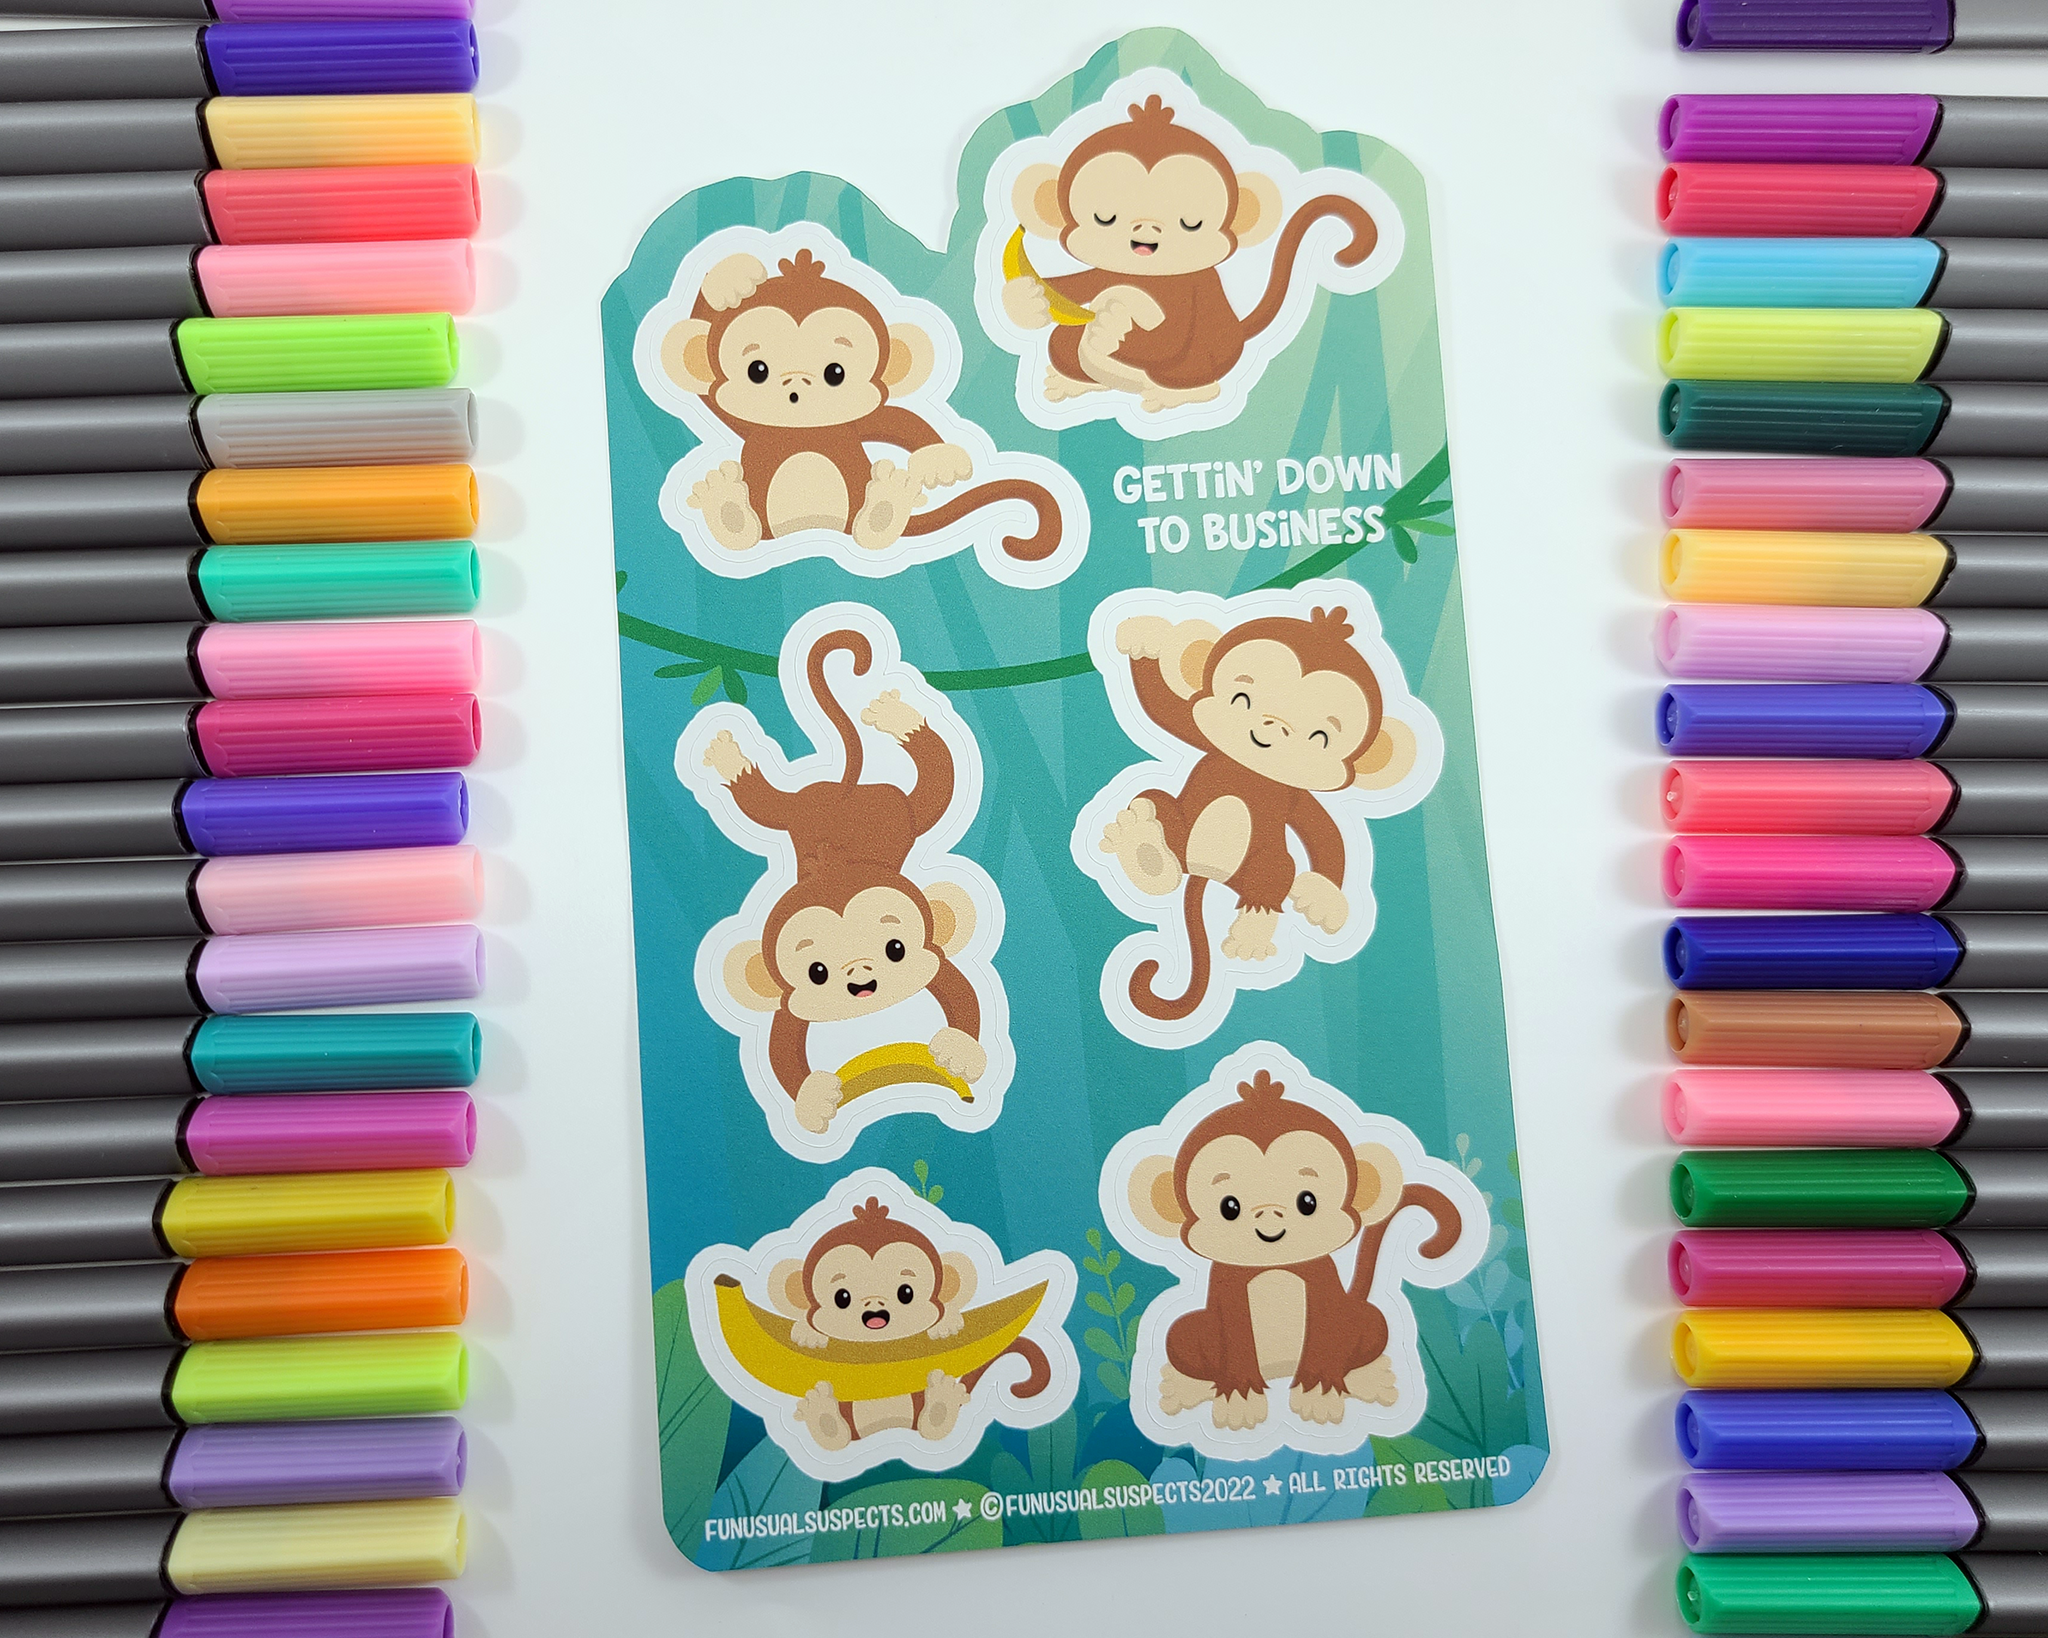 Monkey Sticker Sheet